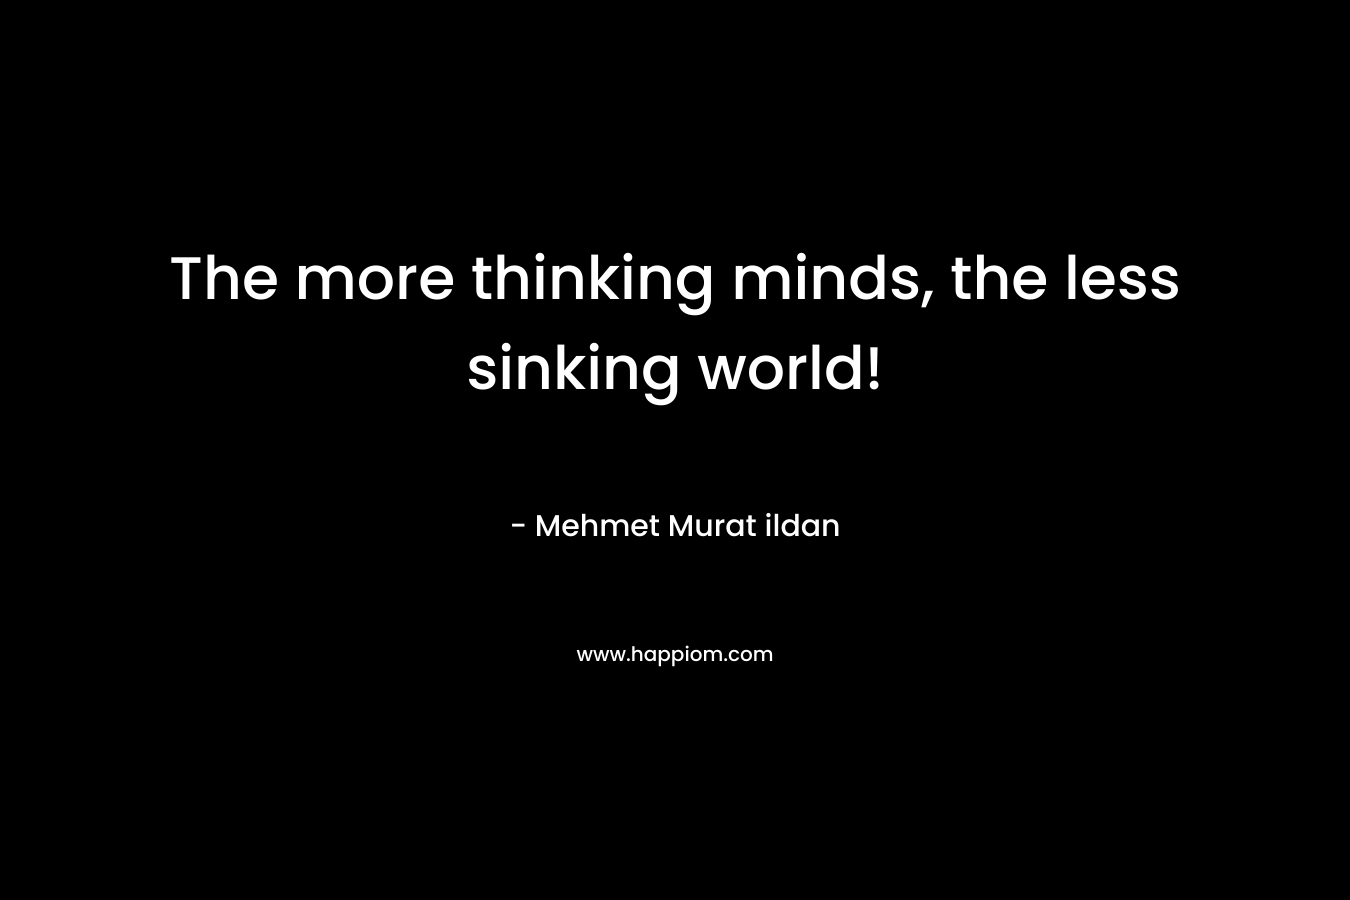 The more thinking minds, the less sinking world! – Mehmet Murat ildan